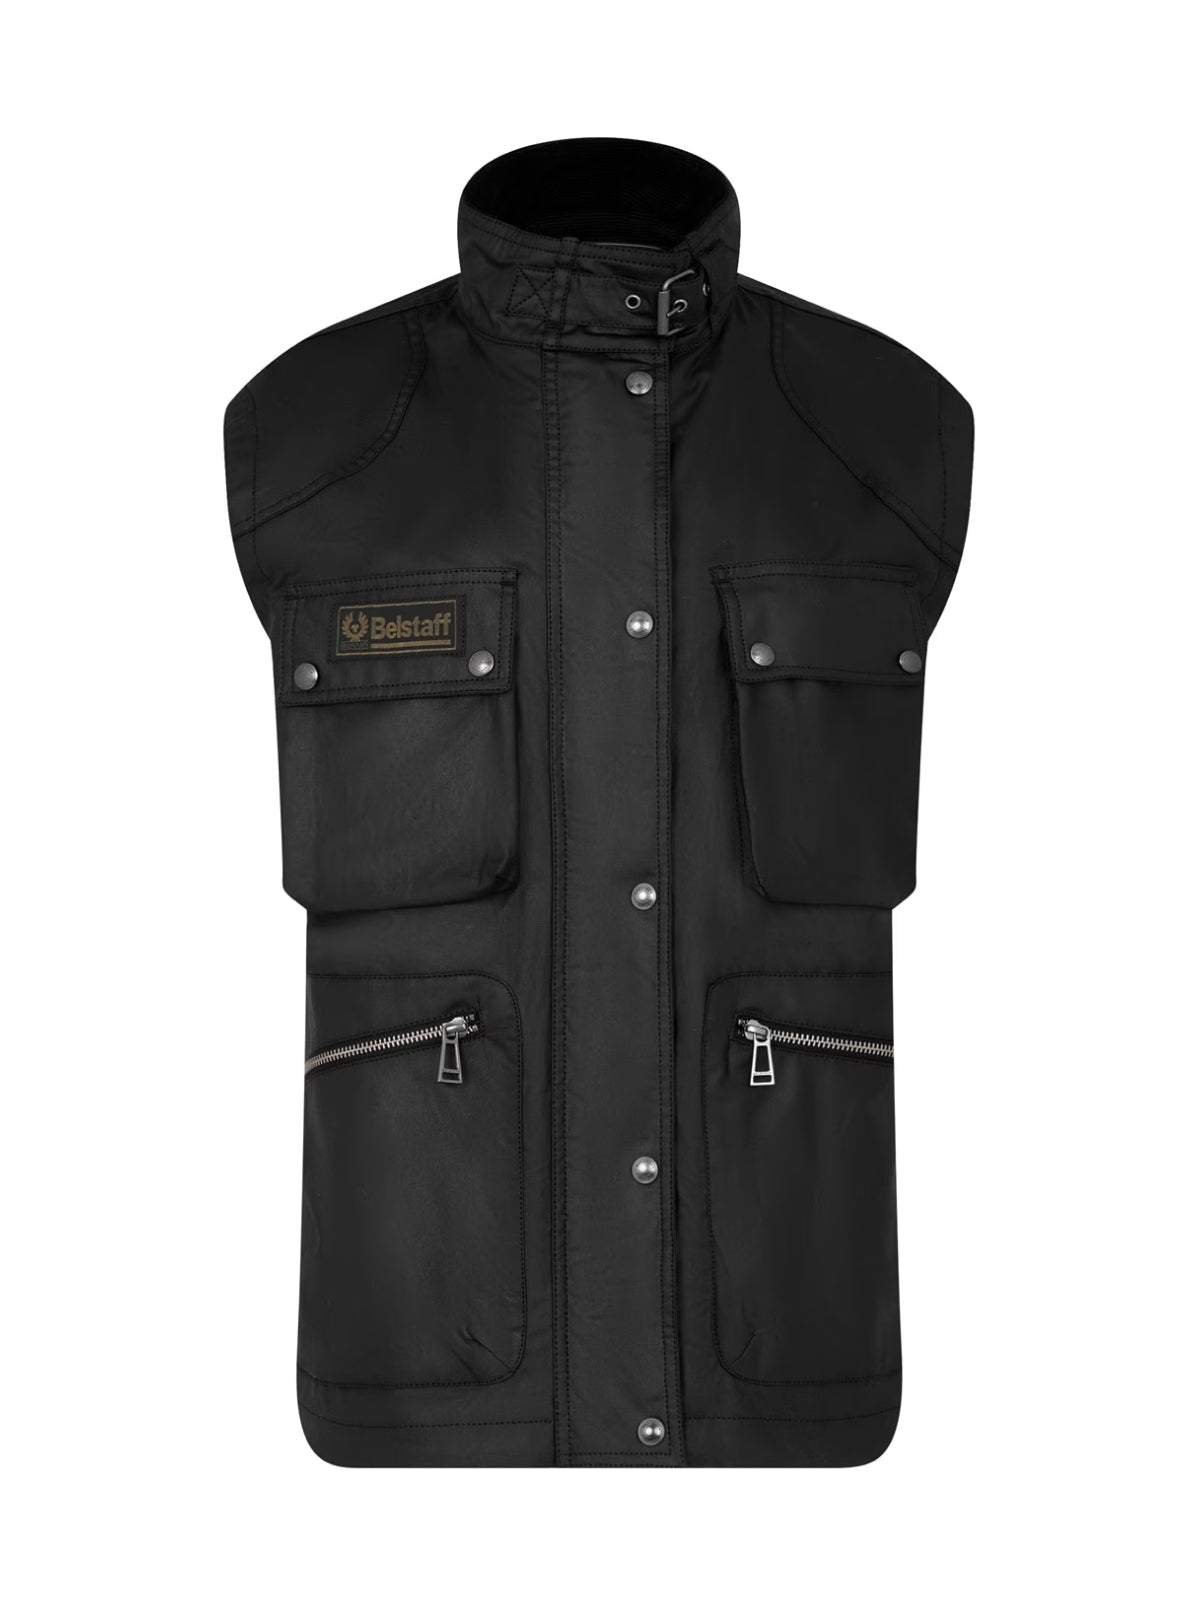 Belstaff-OUTLET-SALE-Legacy Edition Gilet Vest Jacket-ARCHIVIST